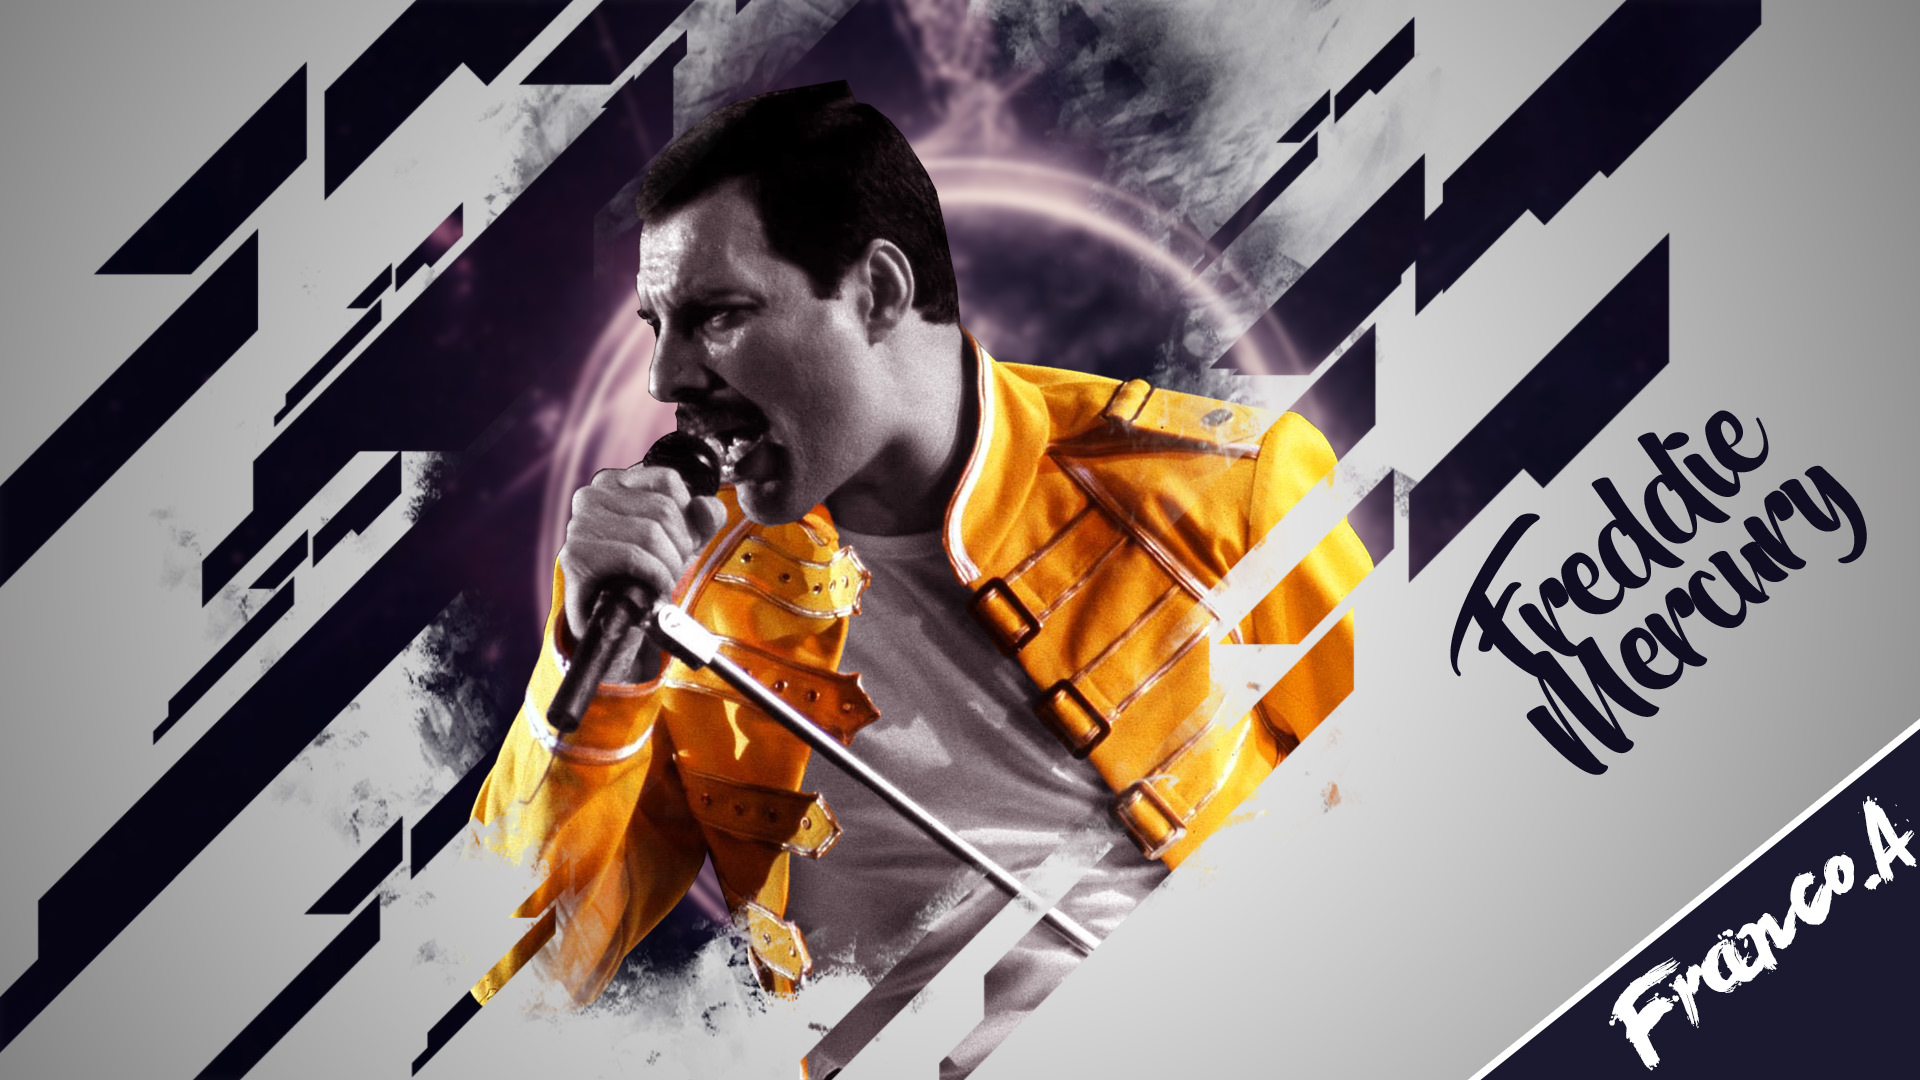 23+] Freddie Mercury Wallpapers - WallpaperSafari